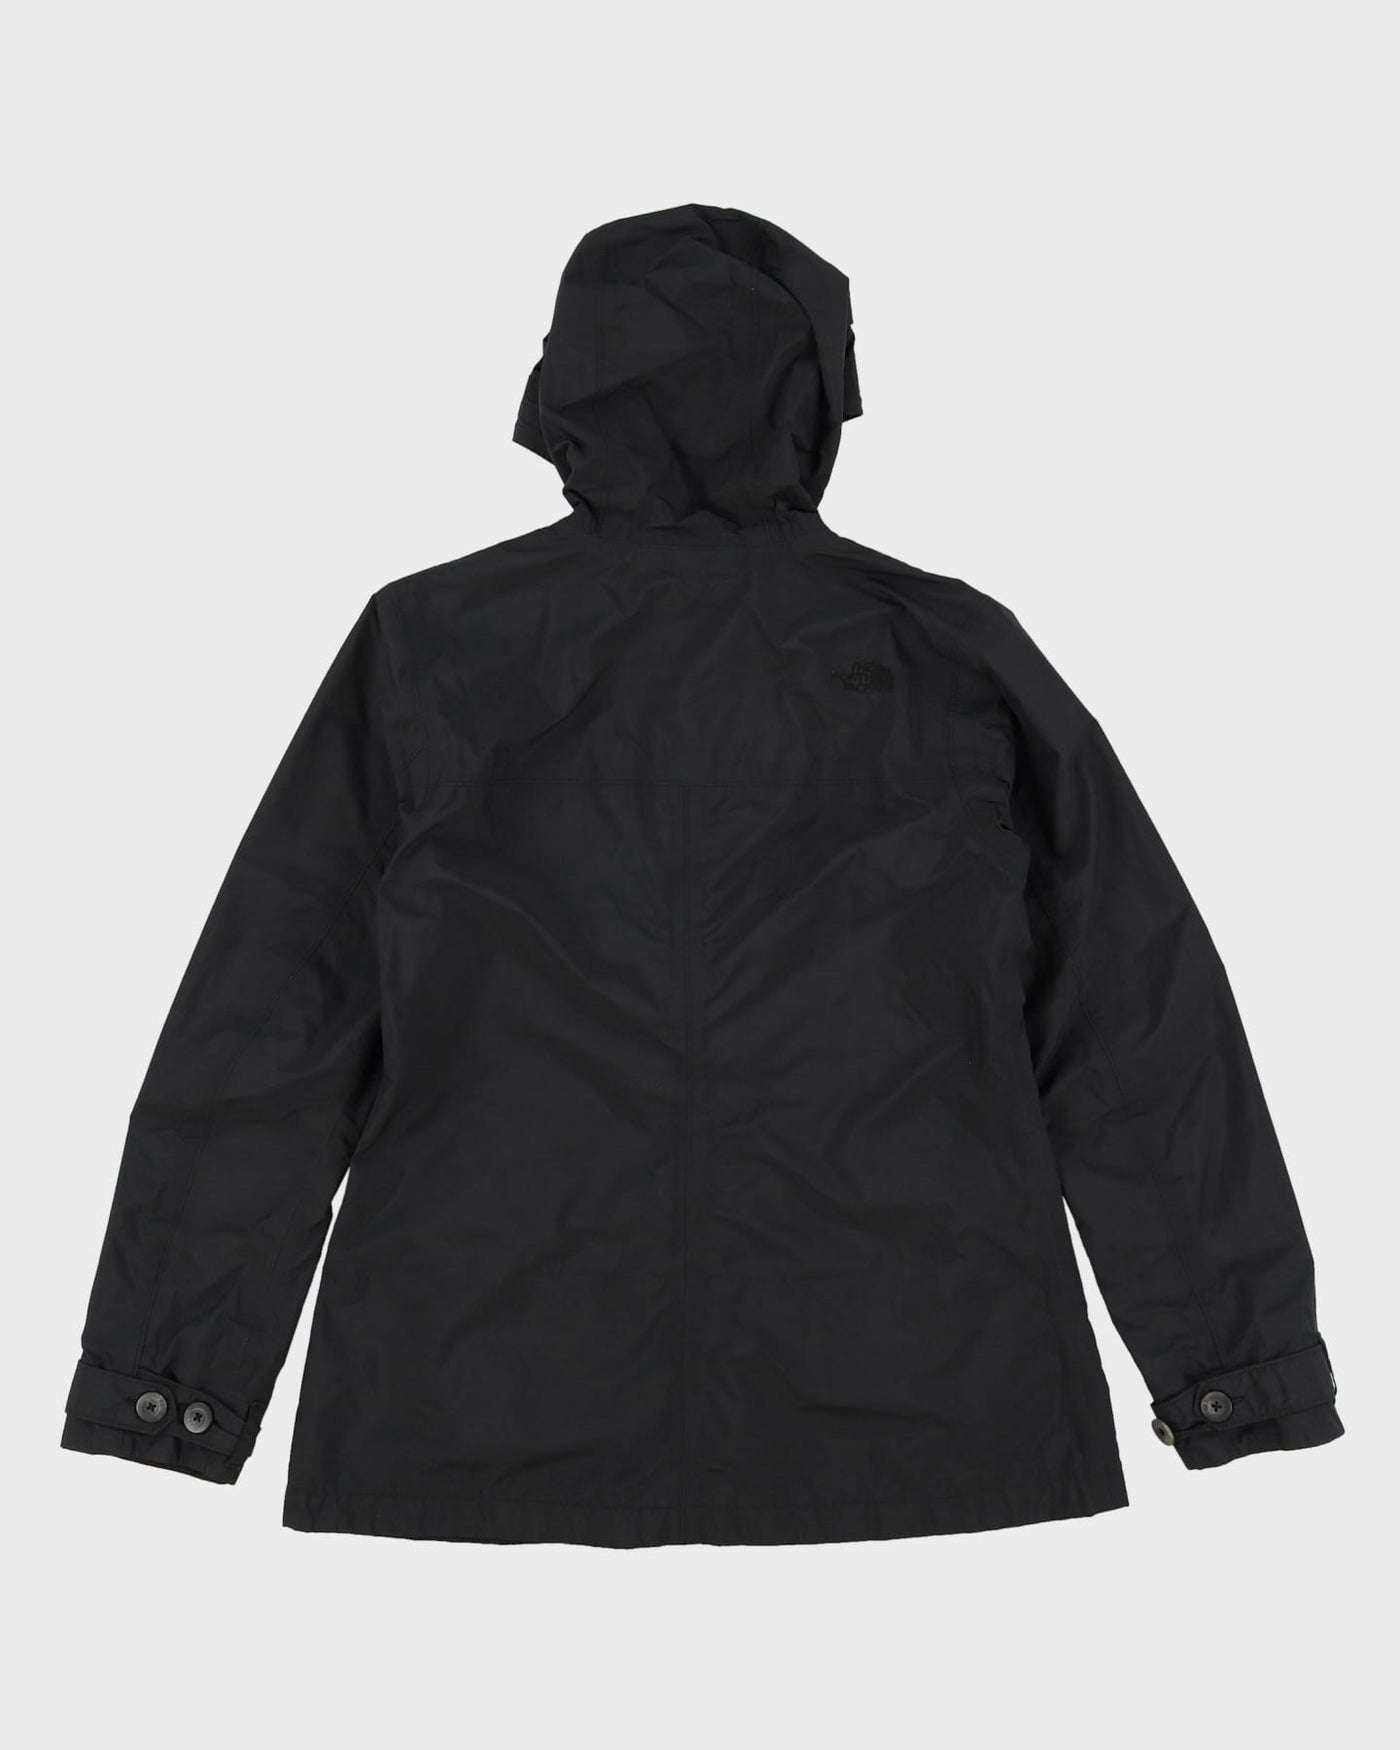 The North Face Black Hooded Anorak Rain Jacket - M